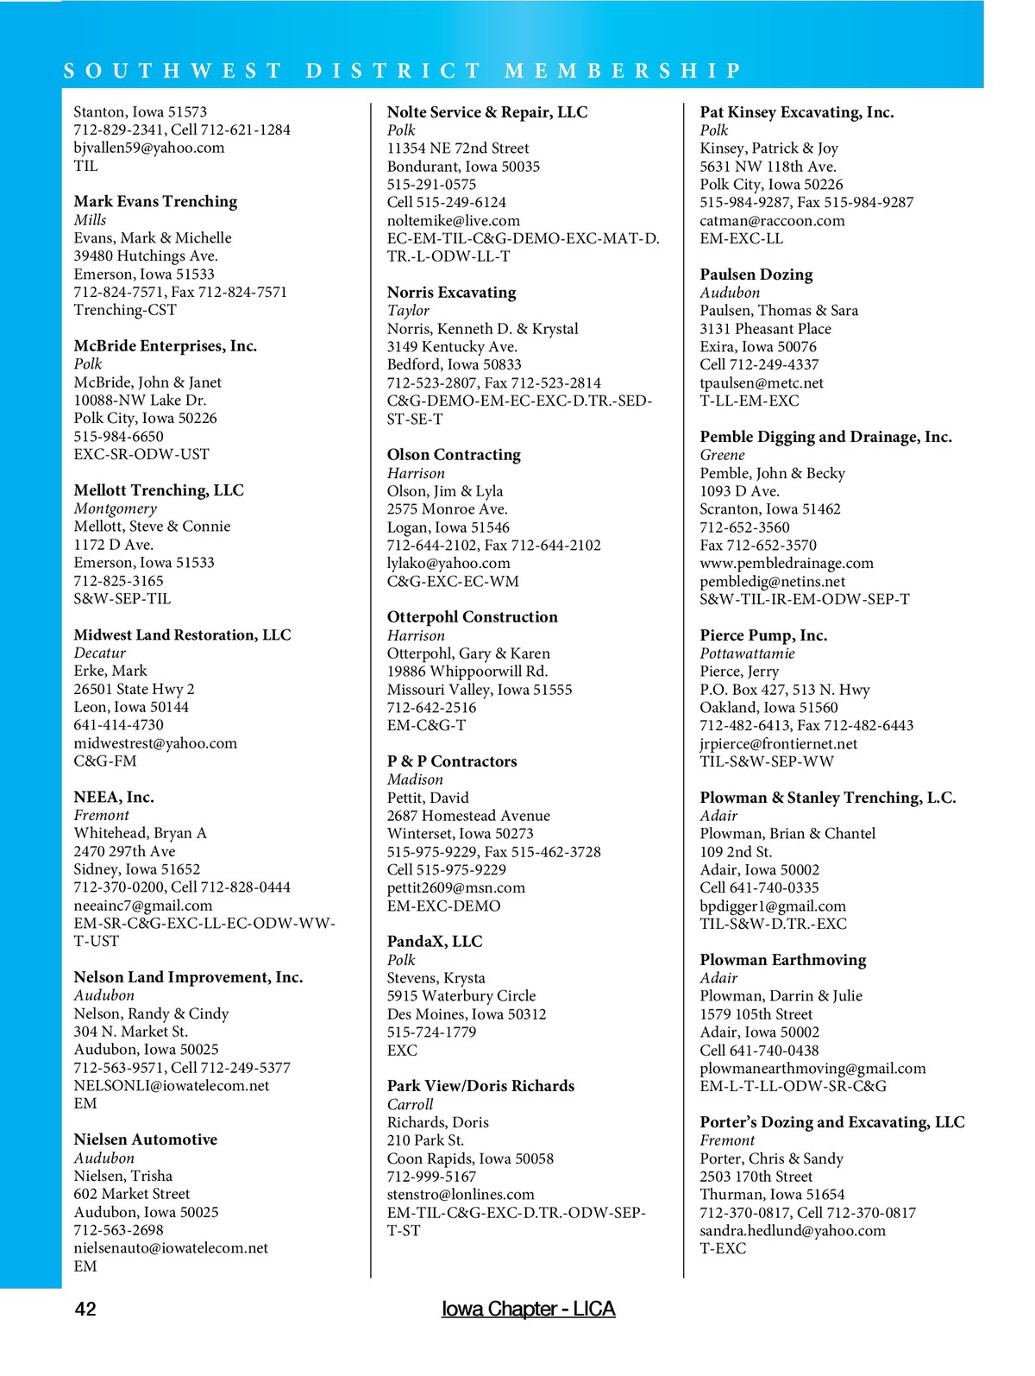 17 Iowa Lica Member Directory